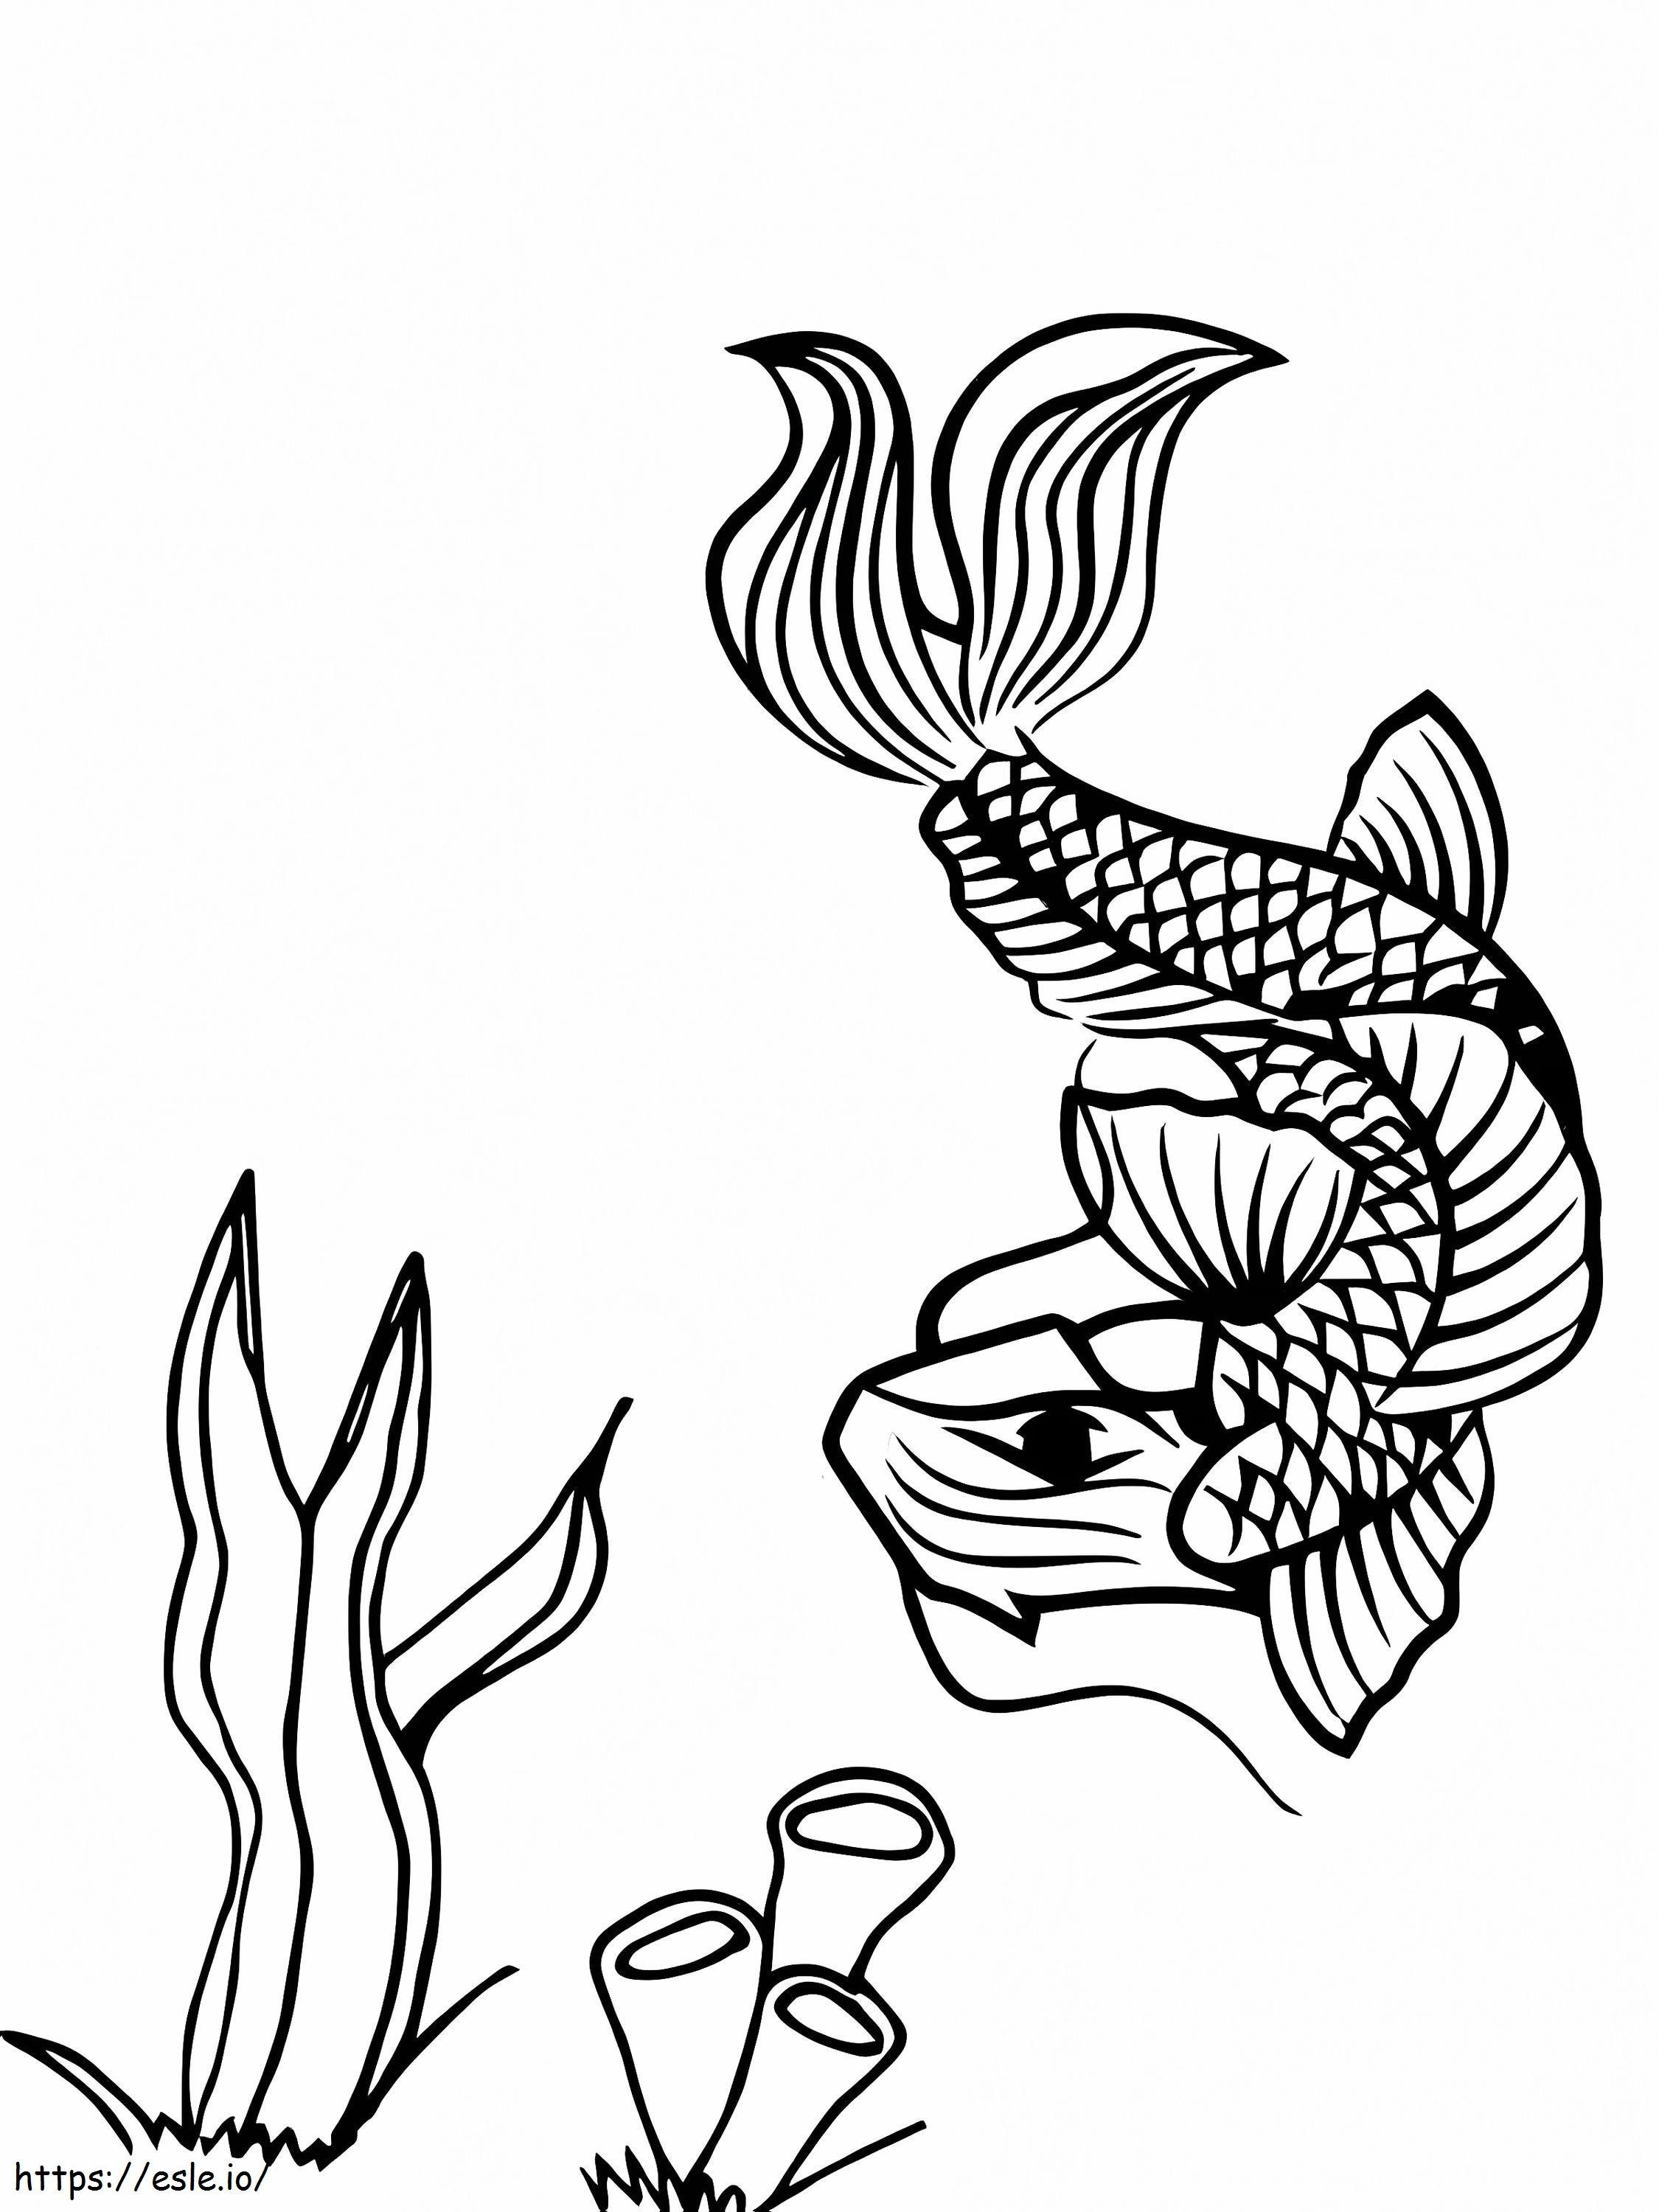 Old Koi Fish coloring page